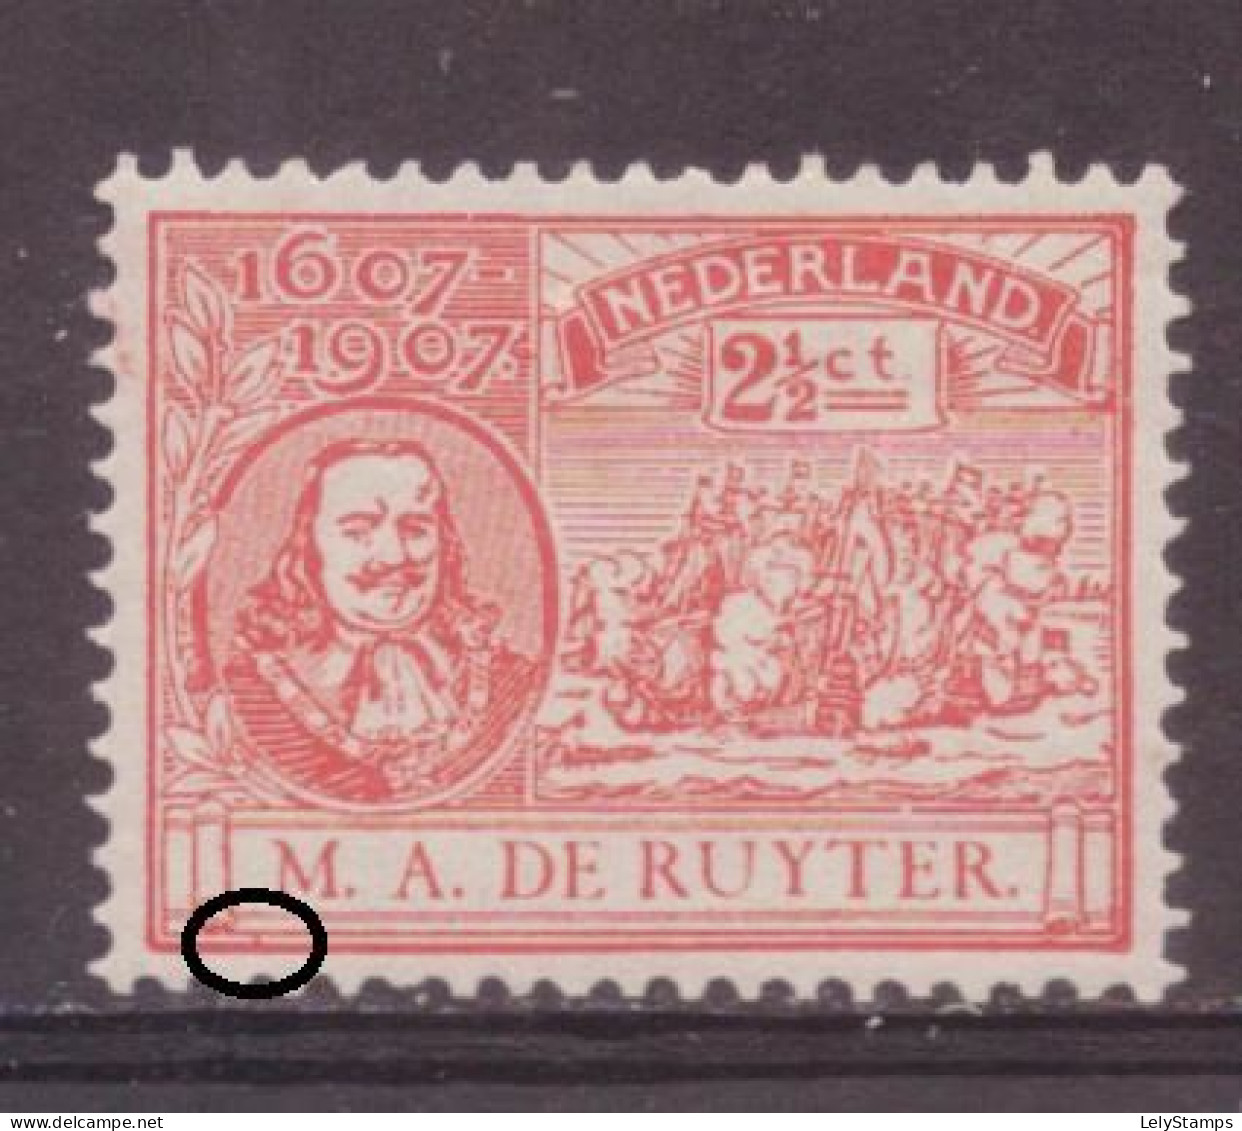 Nederland / Niederlande / Pays Bas NVPH 89 P Plaatfout Plate Error MH * (1907) - Variedades Y Curiosidades